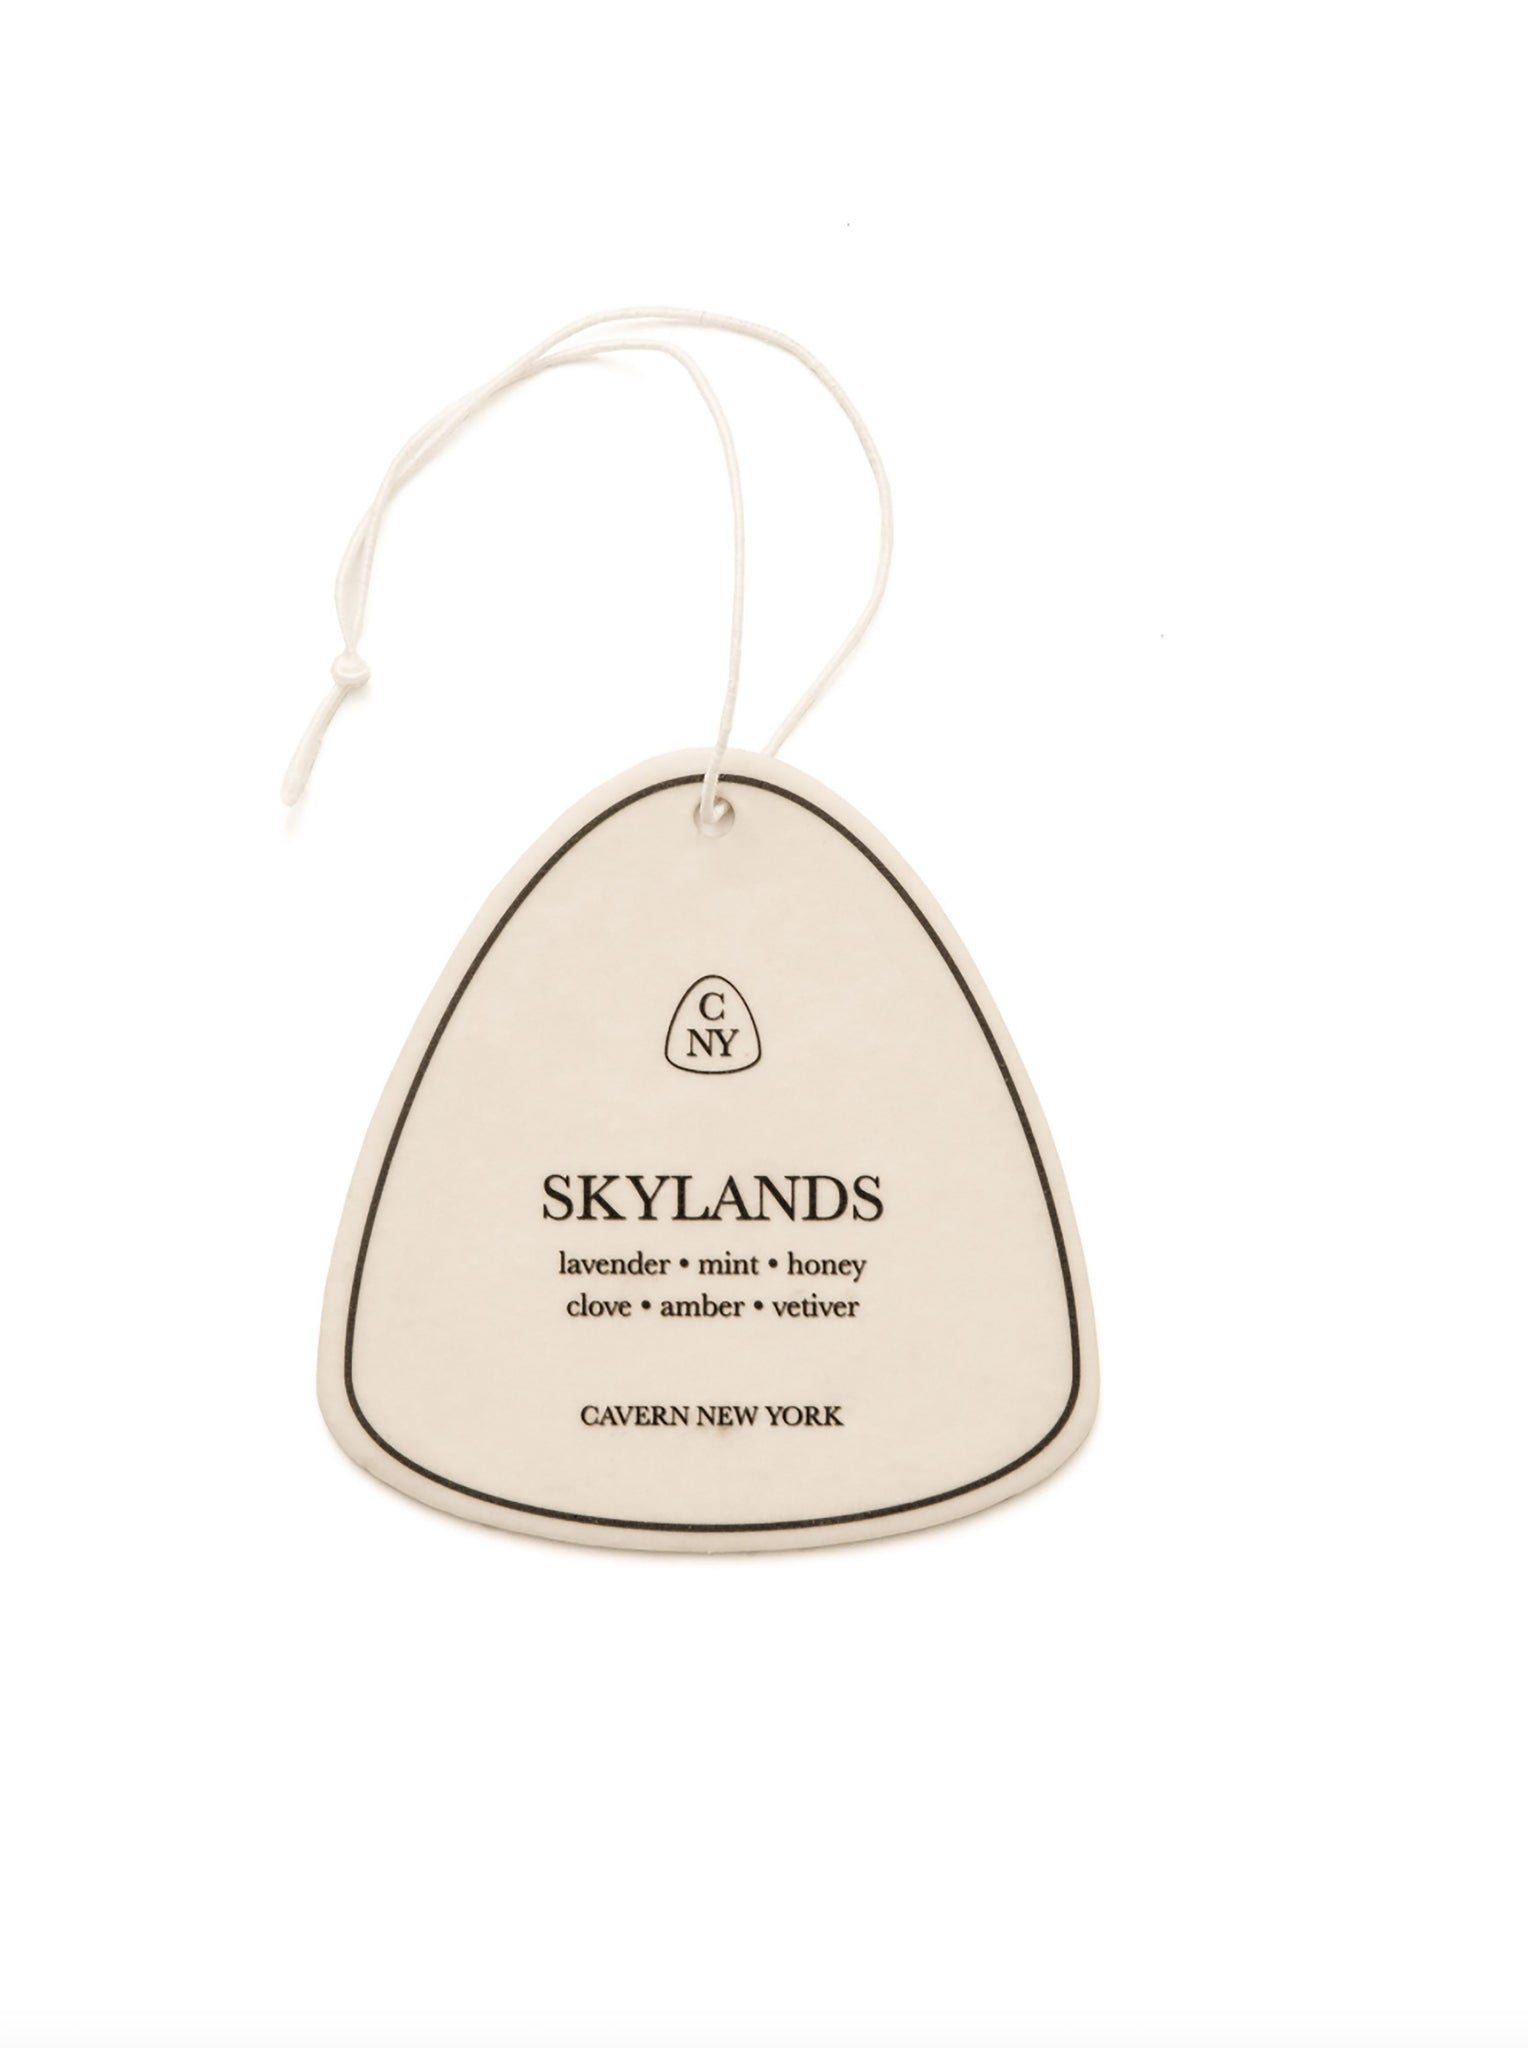 Skylands Air Freshener by Cavern NY